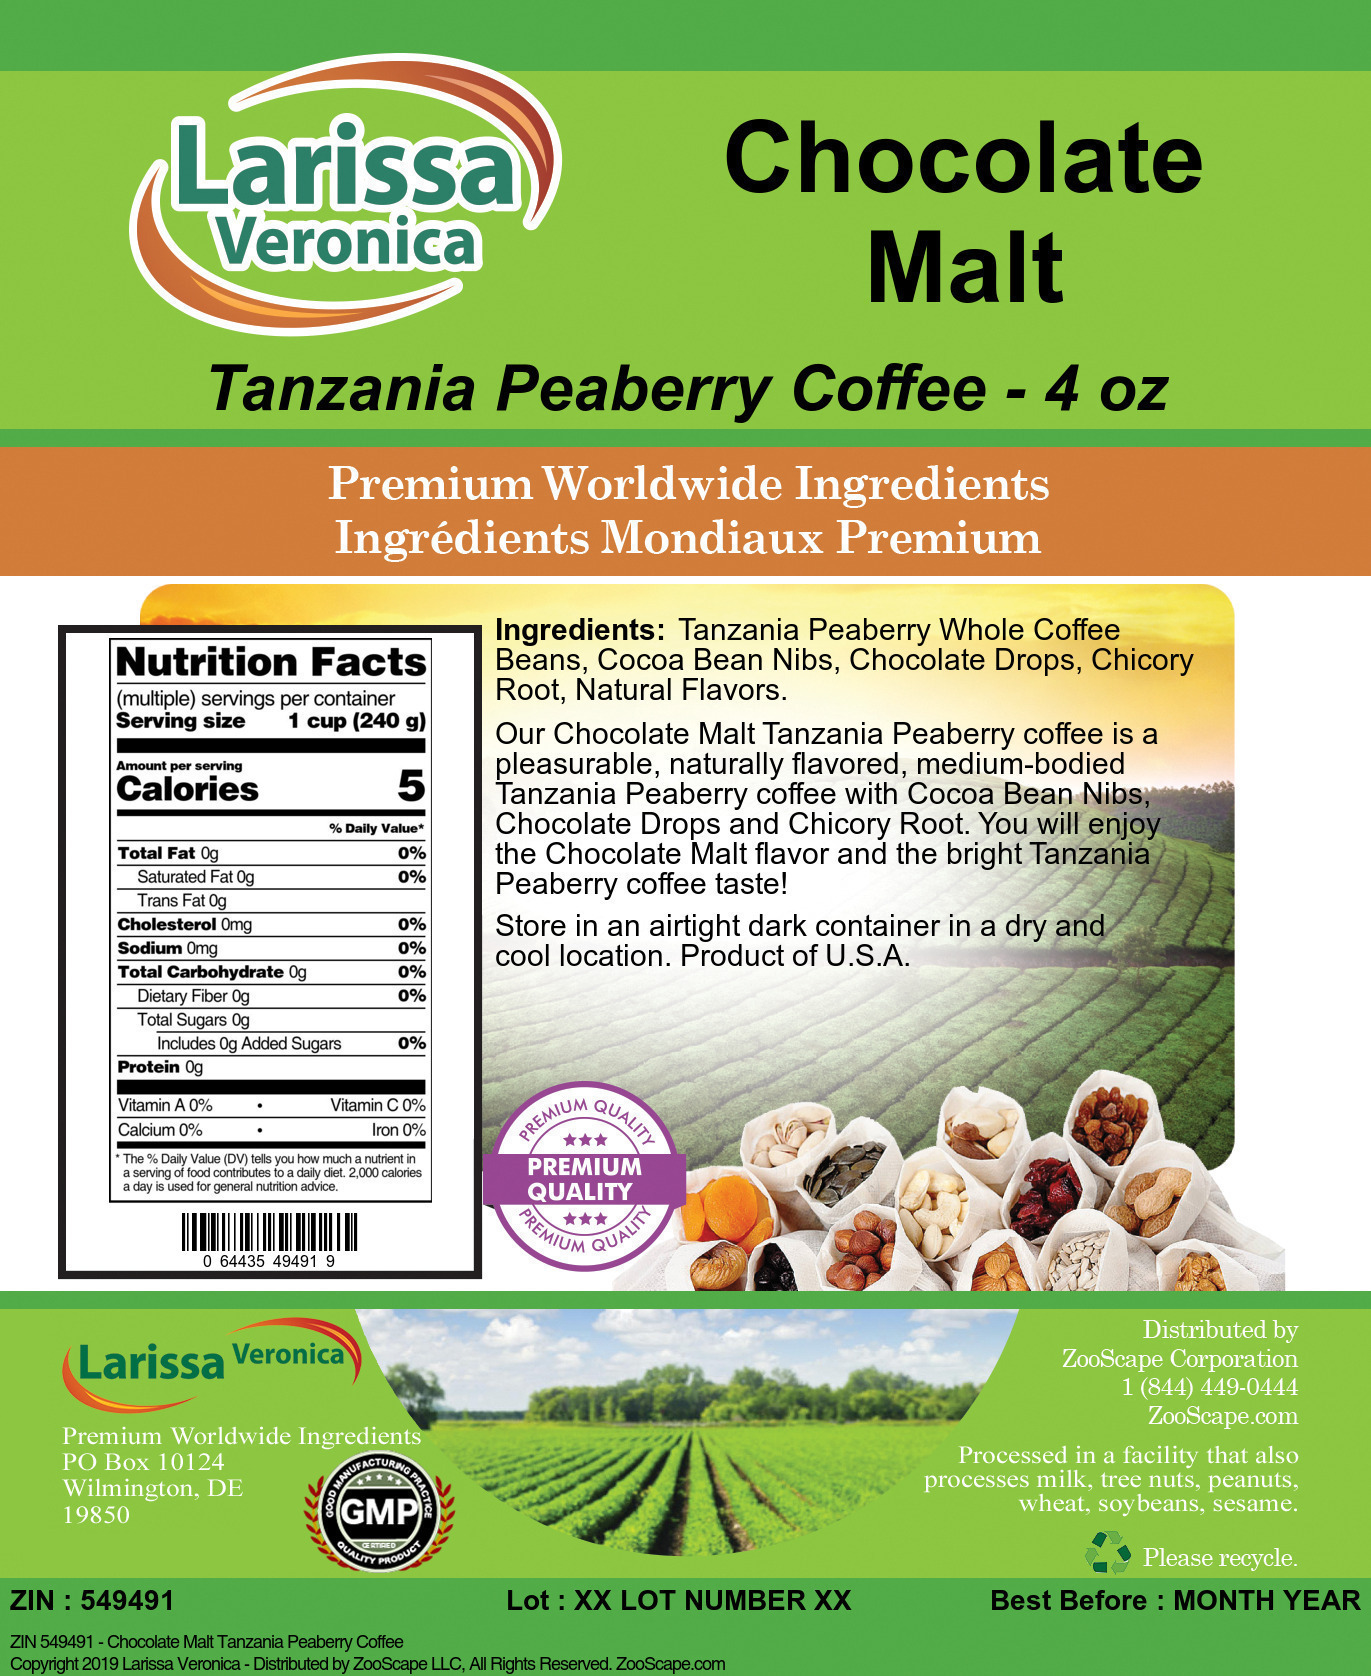 Chocolate Malt Tanzania Peaberry Coffee - Label